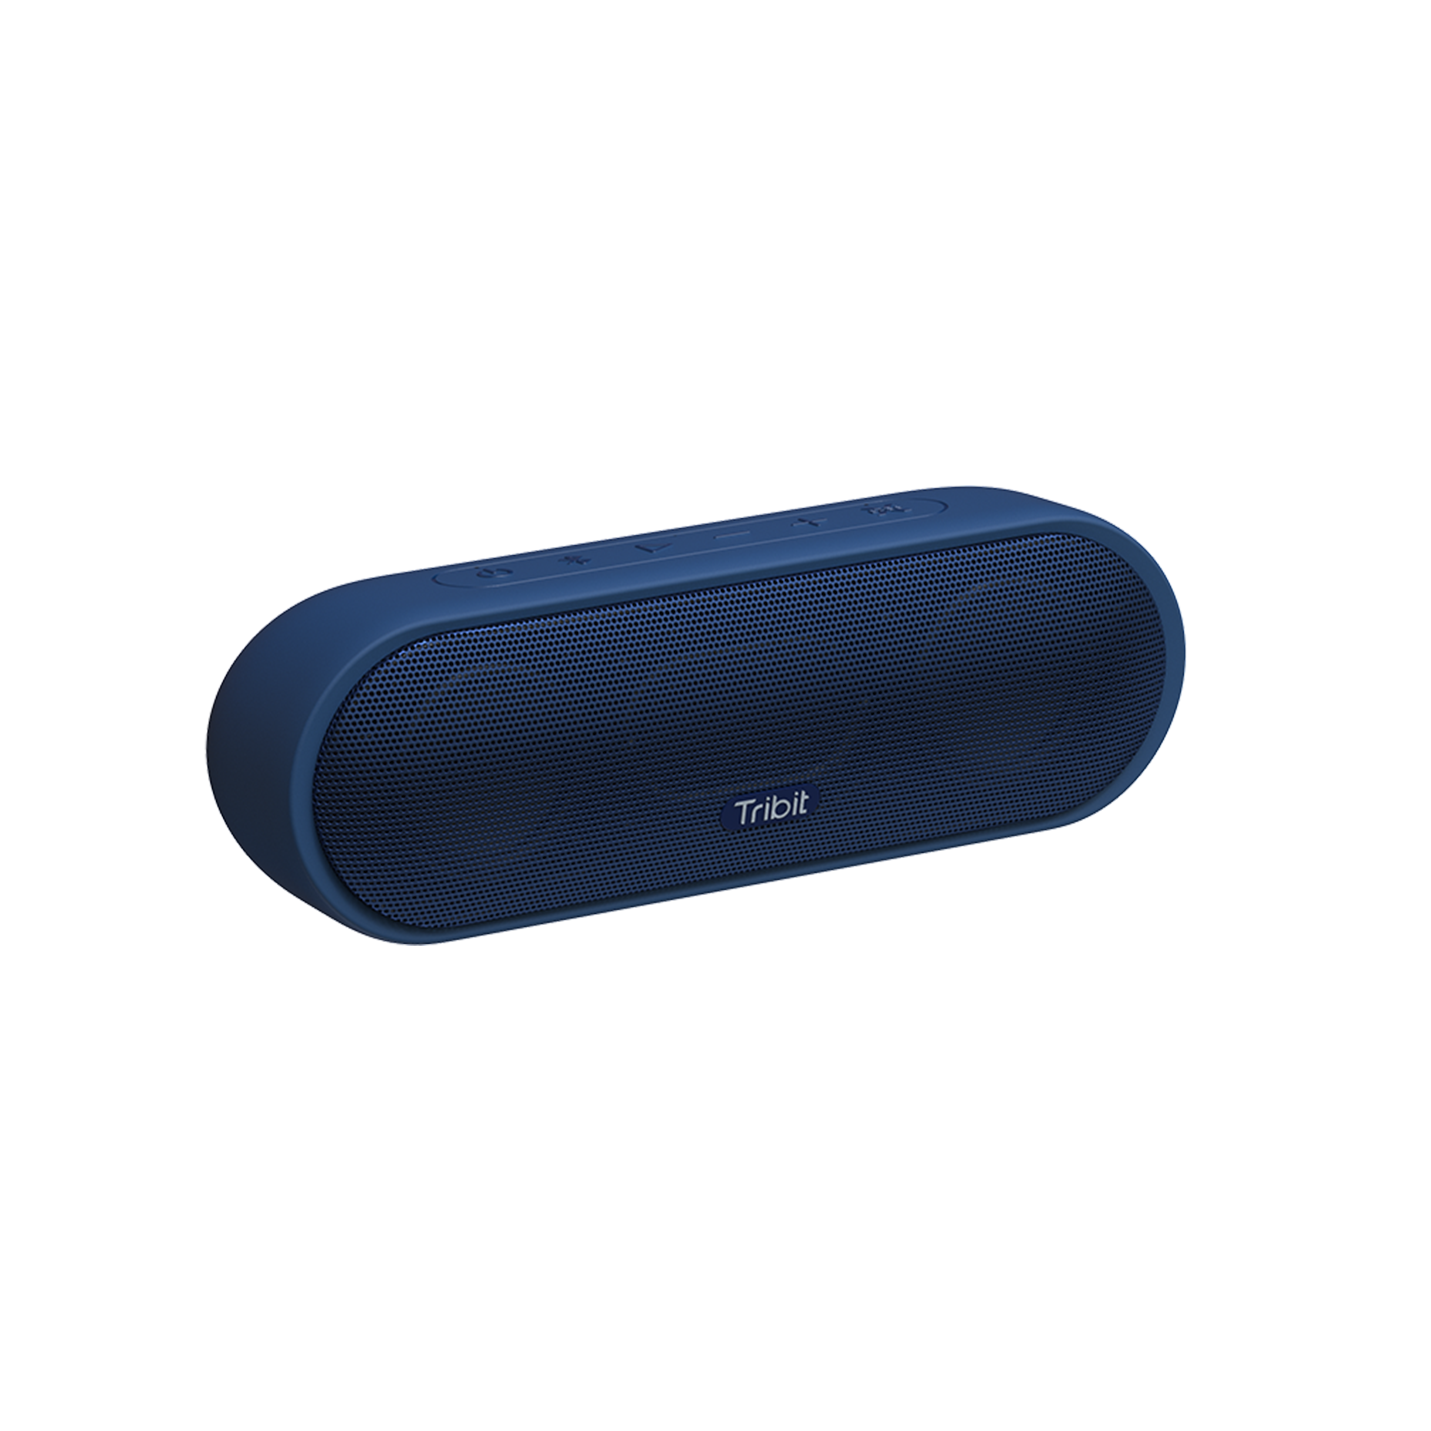 Tribit MaxSound Plus Wireless Speaker